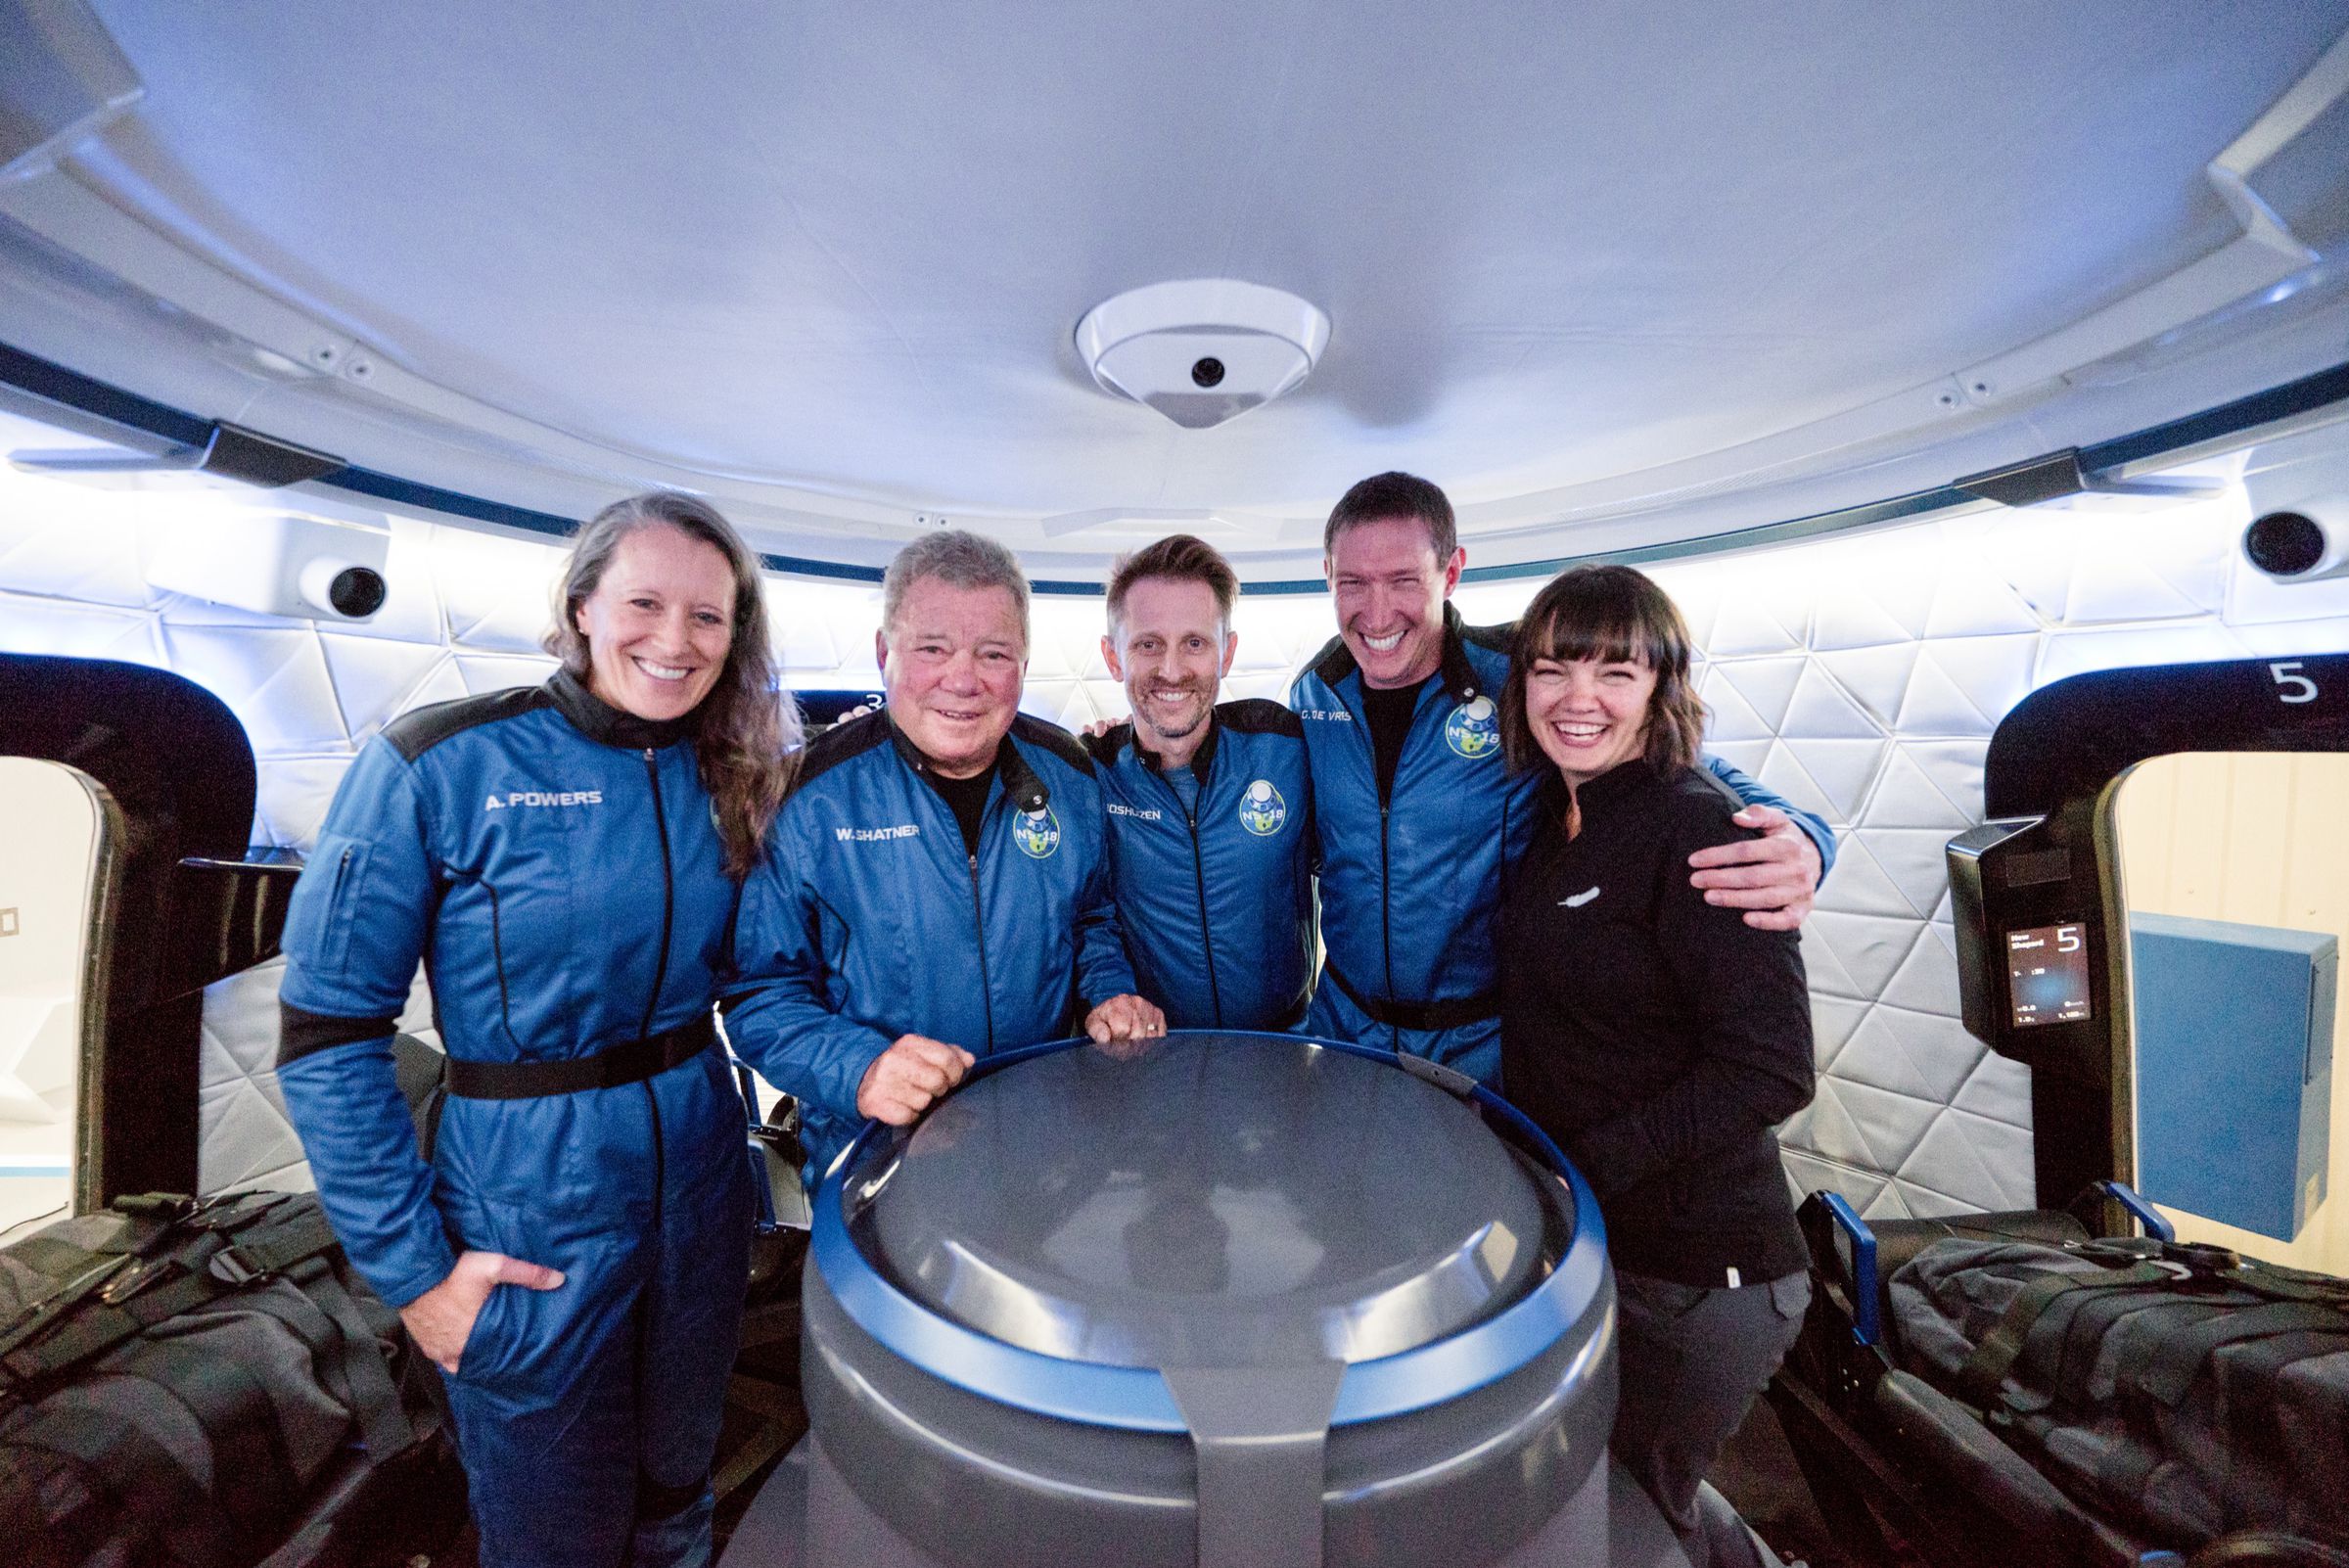 The crew of today’s flight: Audrey Powers, William Shatner, Chris Boshuizen, and Glen de Vries, with Crew Member 7 Sarah Knights